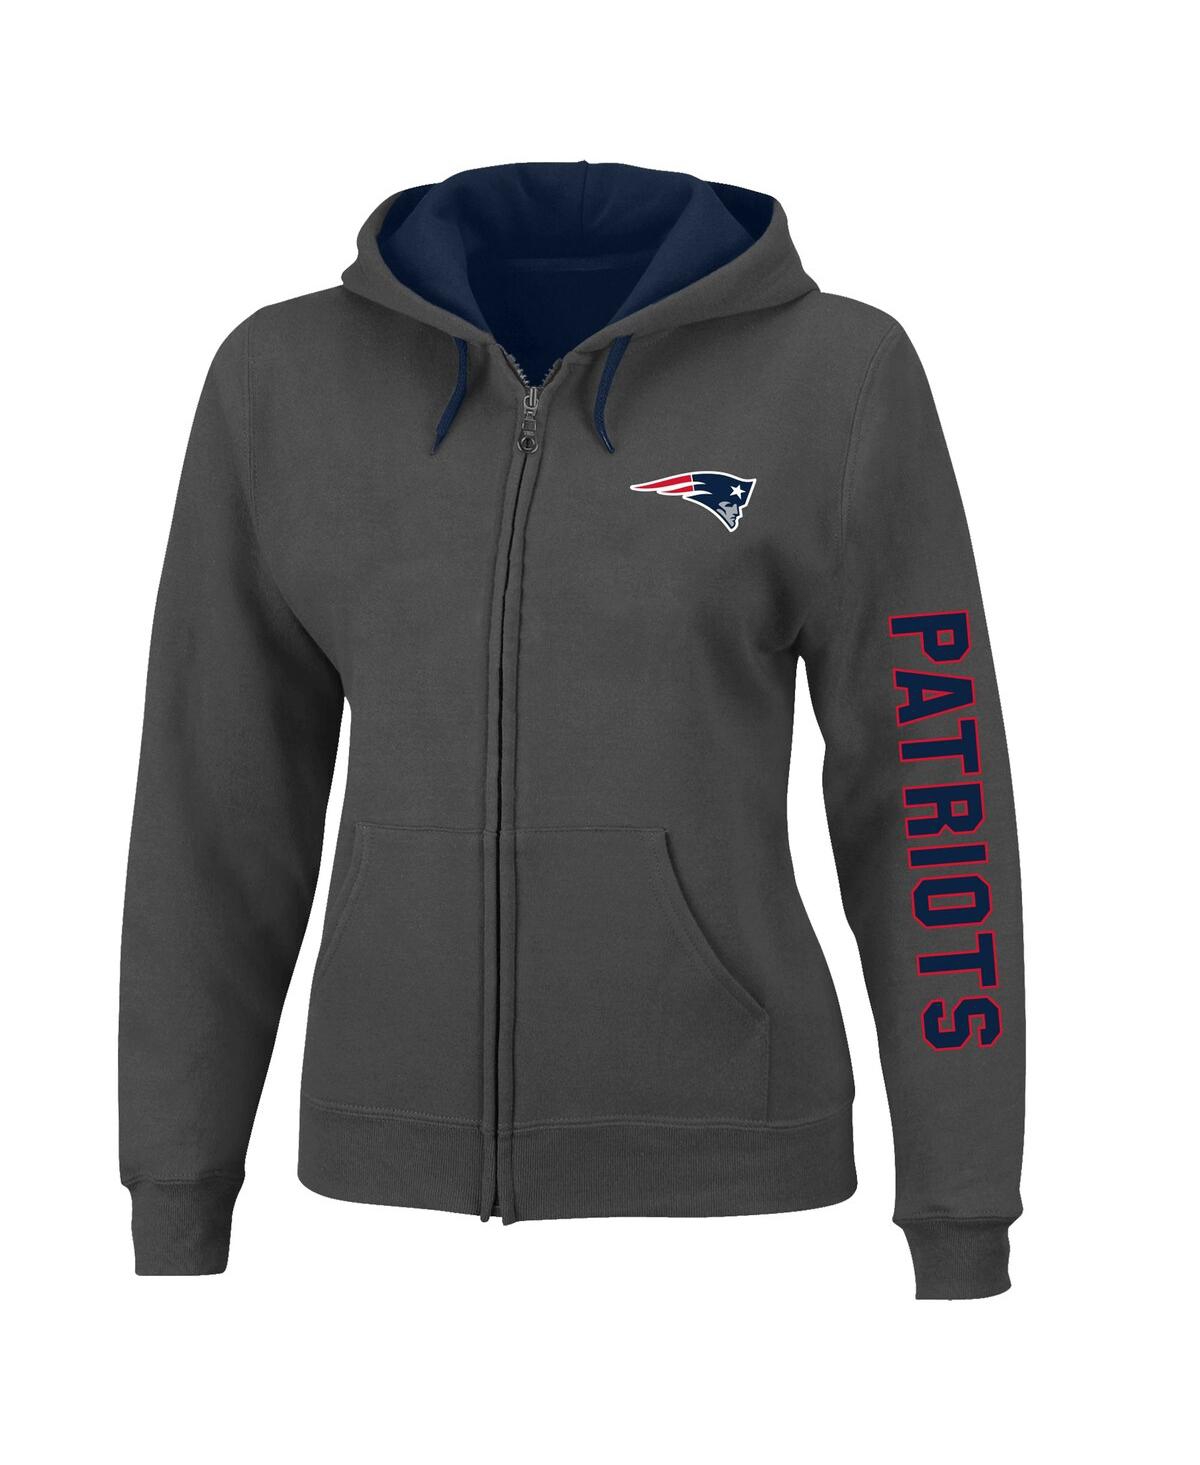 Women's Heather Charcoal New England Patriots Plus Size Fleece Full-Zip Hoodie Jacket - Heather Charcoal